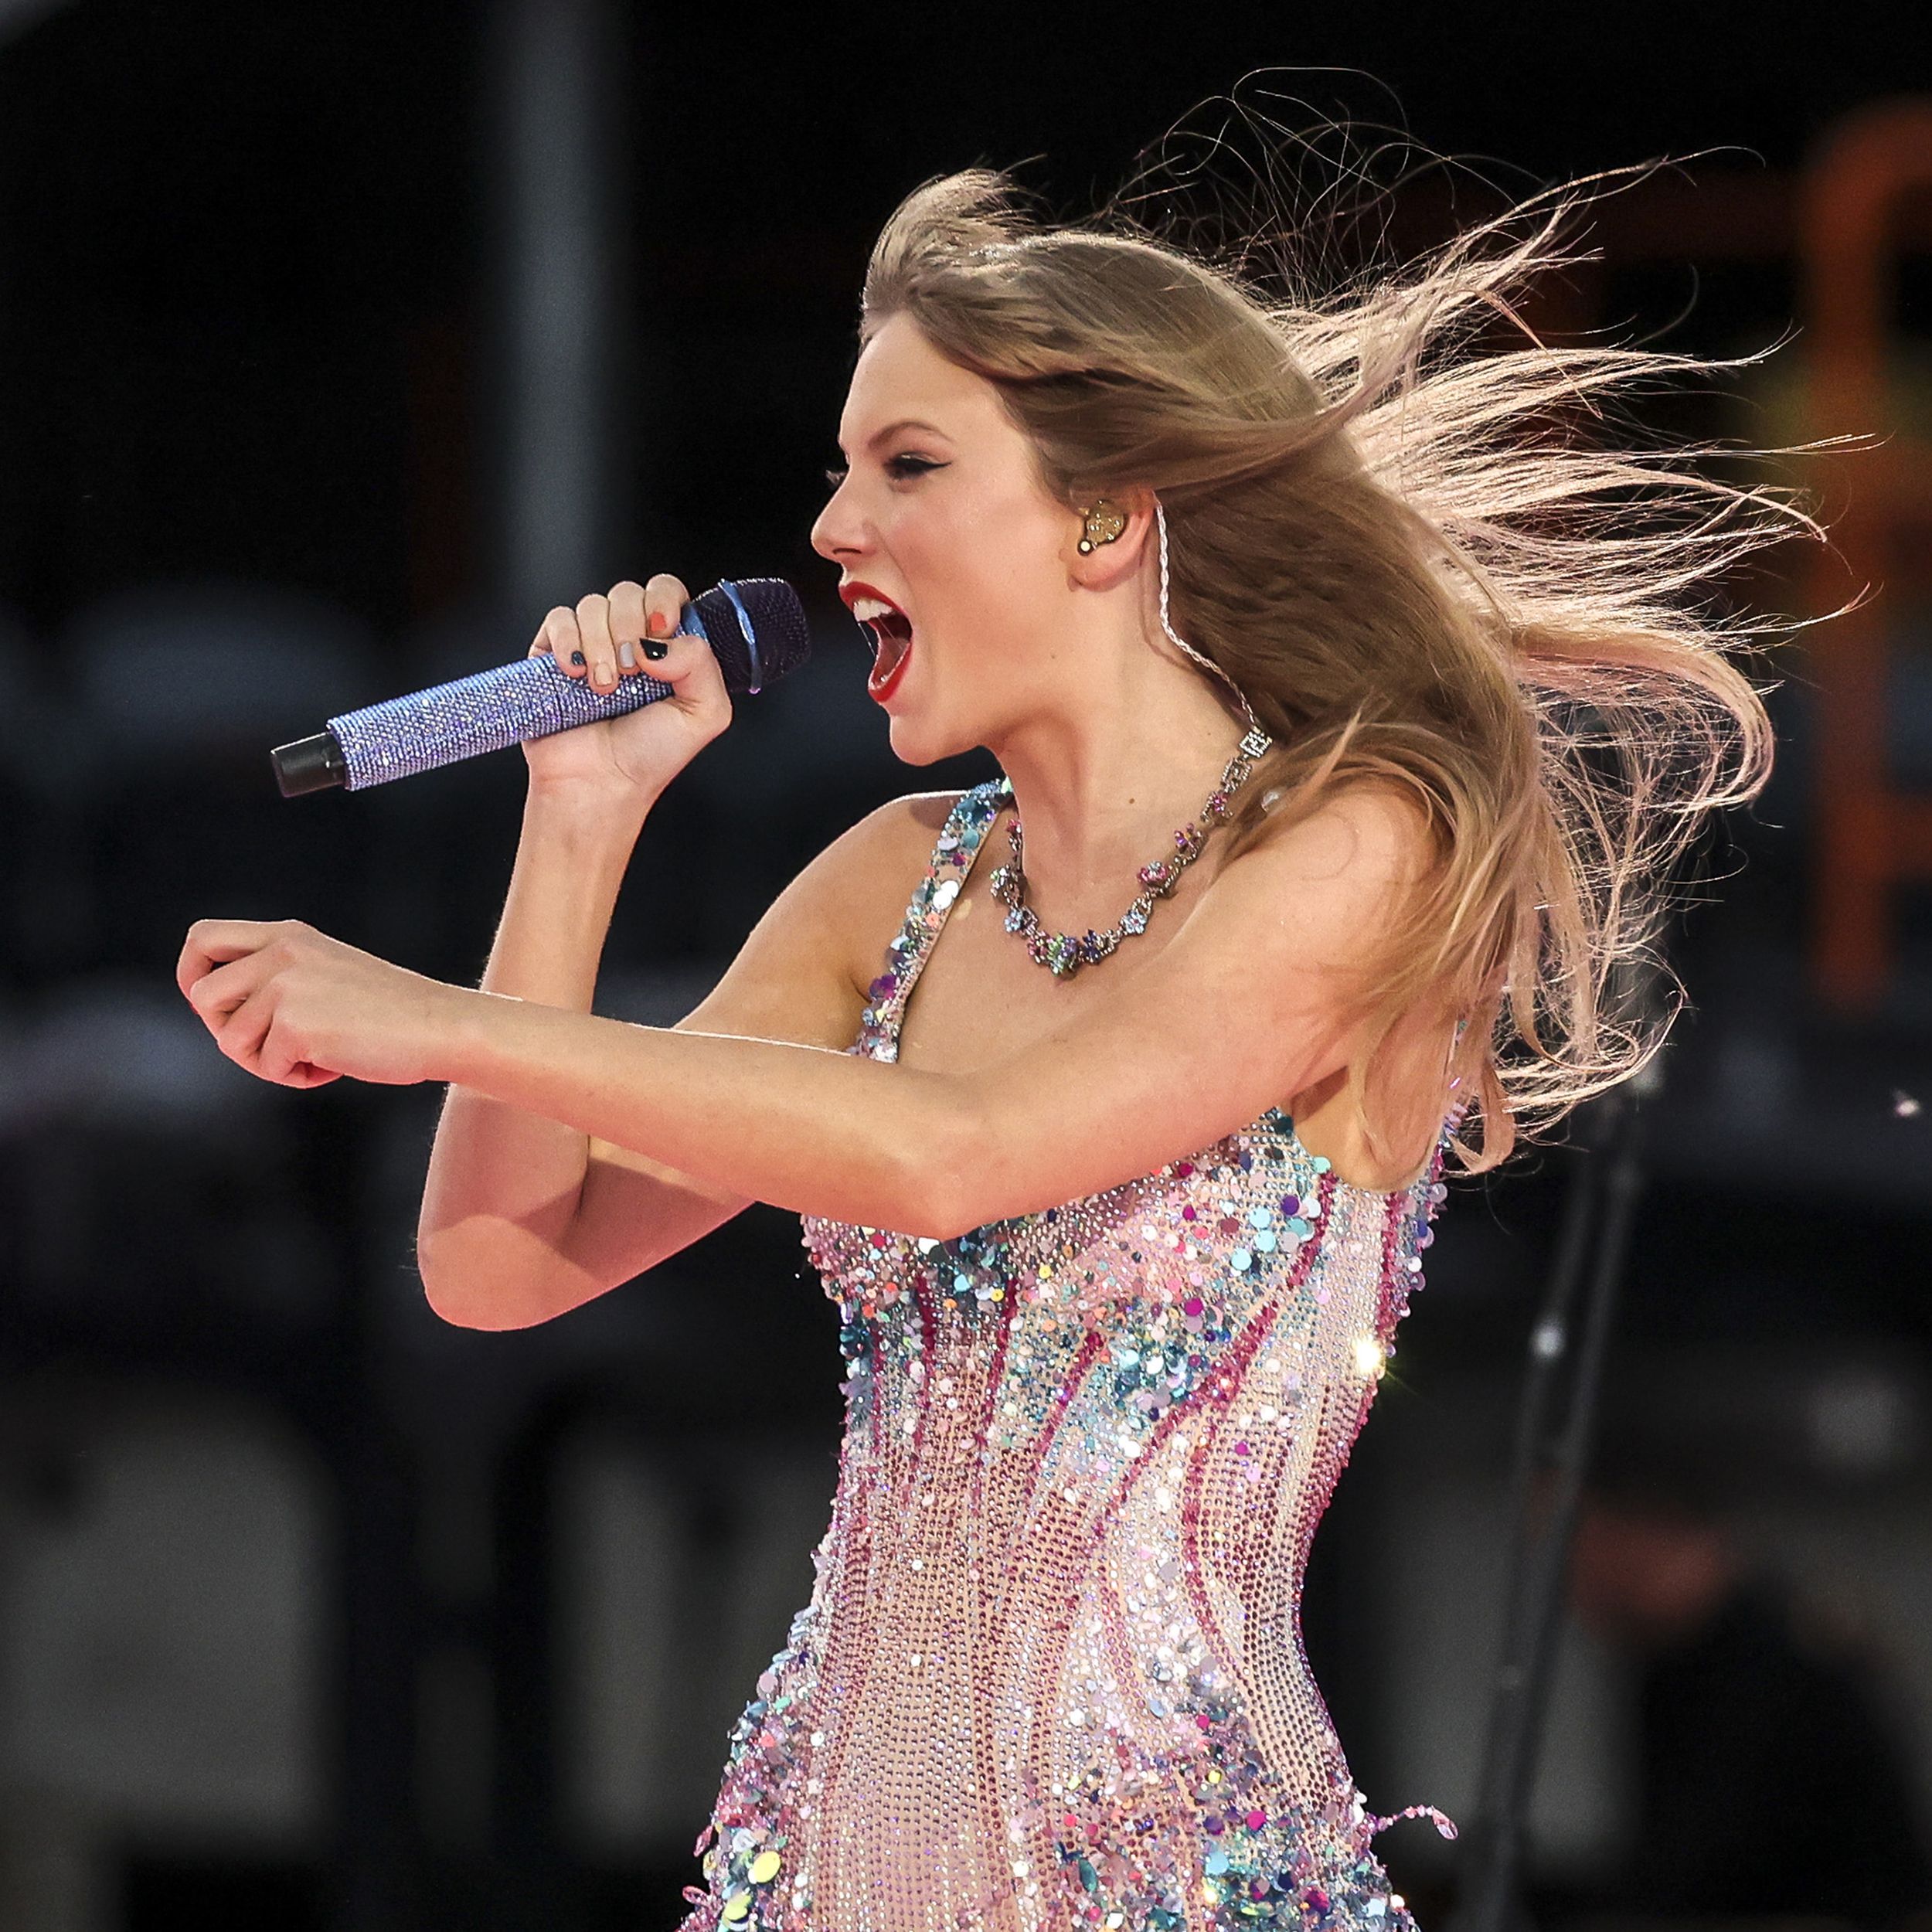 Friendship bracelets, Tay-gating: Inside Taylor Swift fans' plans